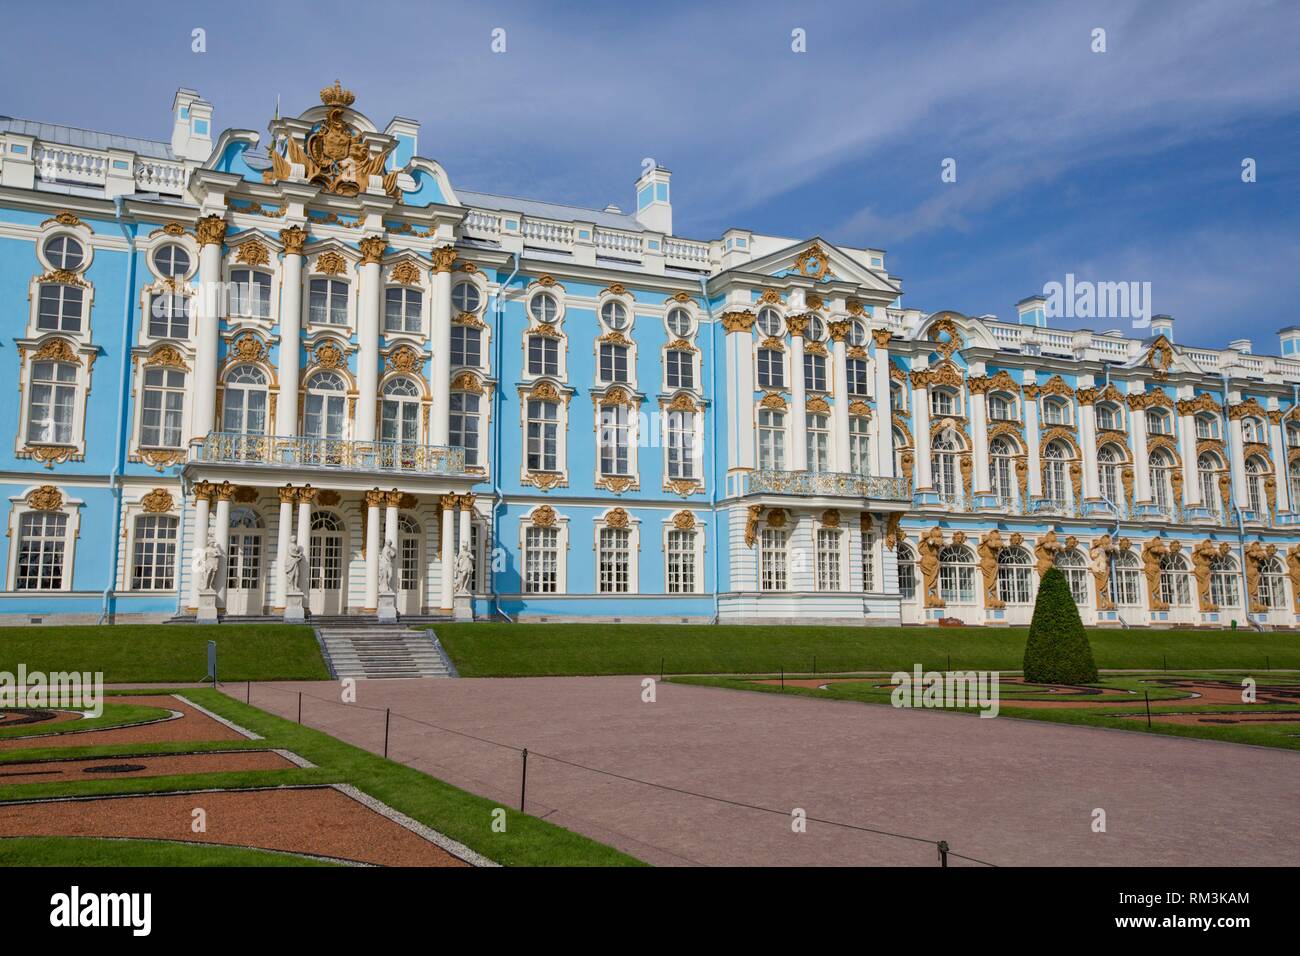 Catherine's Palace, Tsarskoye Selo, Pushkin, UNESCO World Heritage Site, Russia Stock Photo